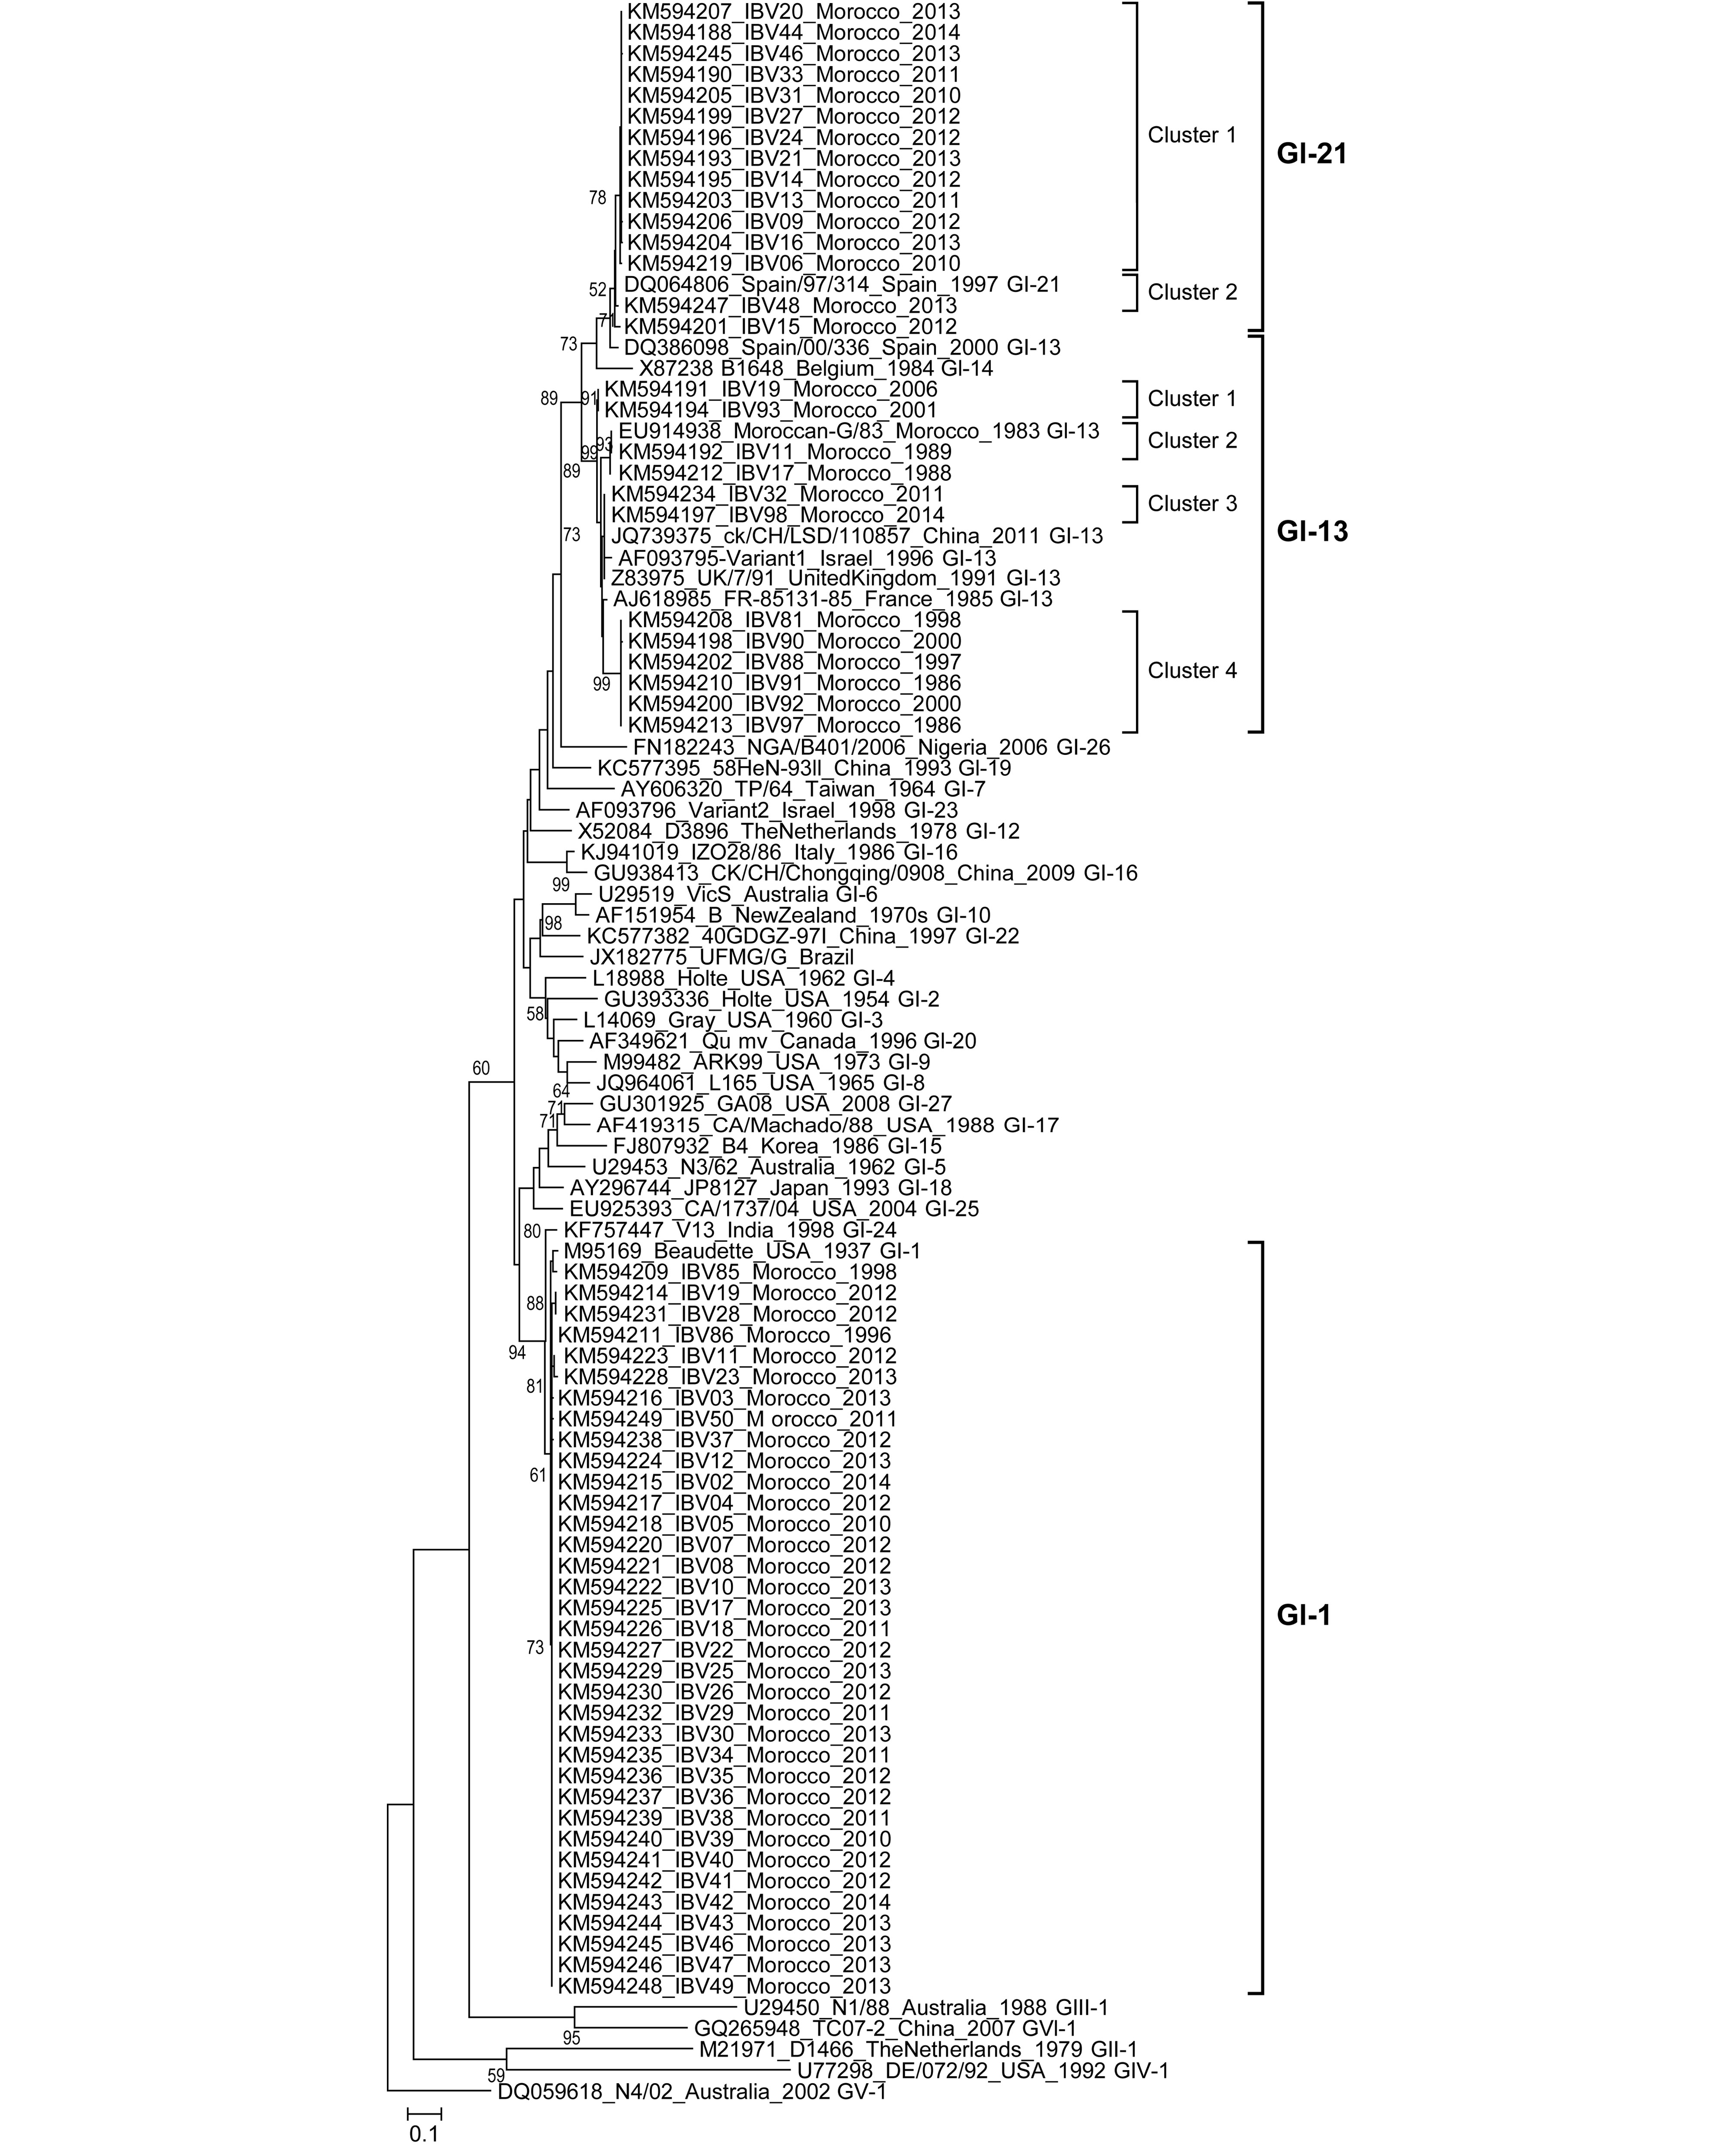 Phylogenetic analysis of avian infectious bronchitis virus isolates ...